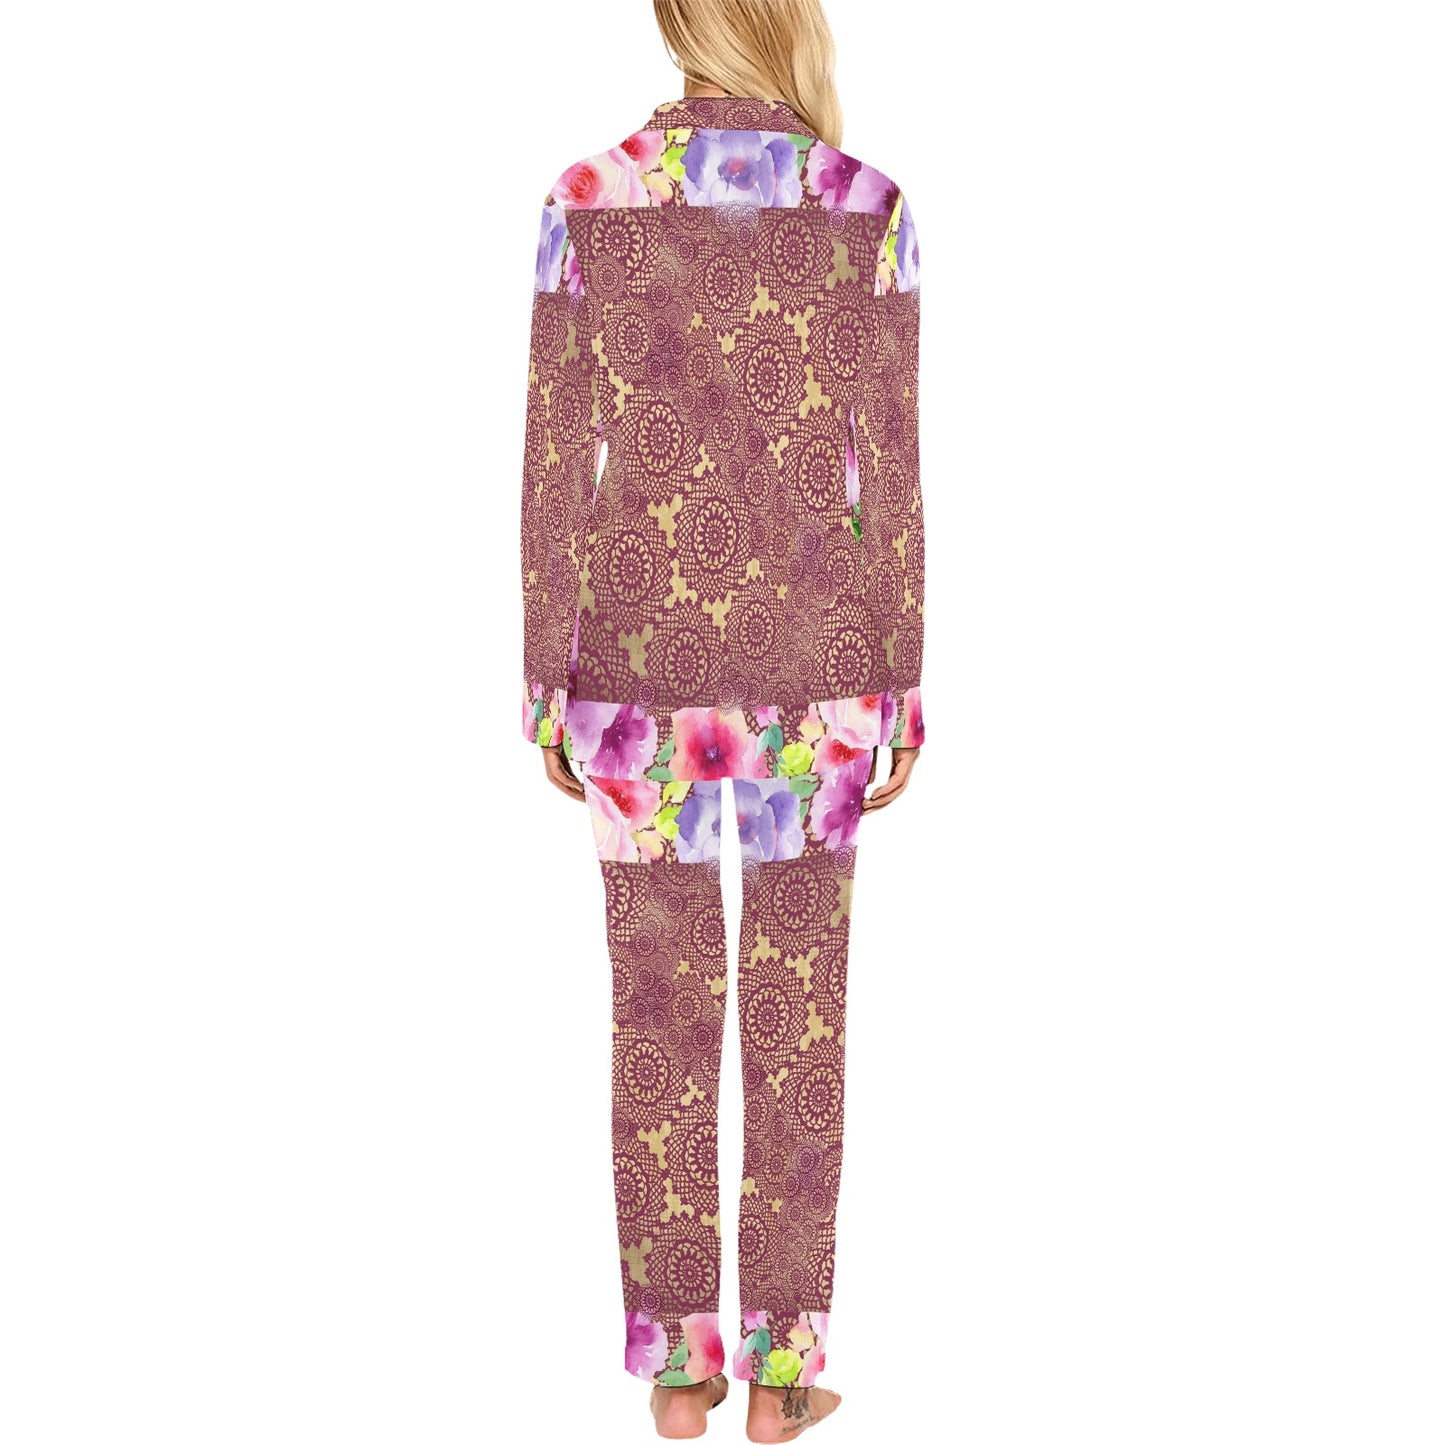 Victorian printed lace pajama set, design 13 Women's Long Pajama Set (Sets 02)